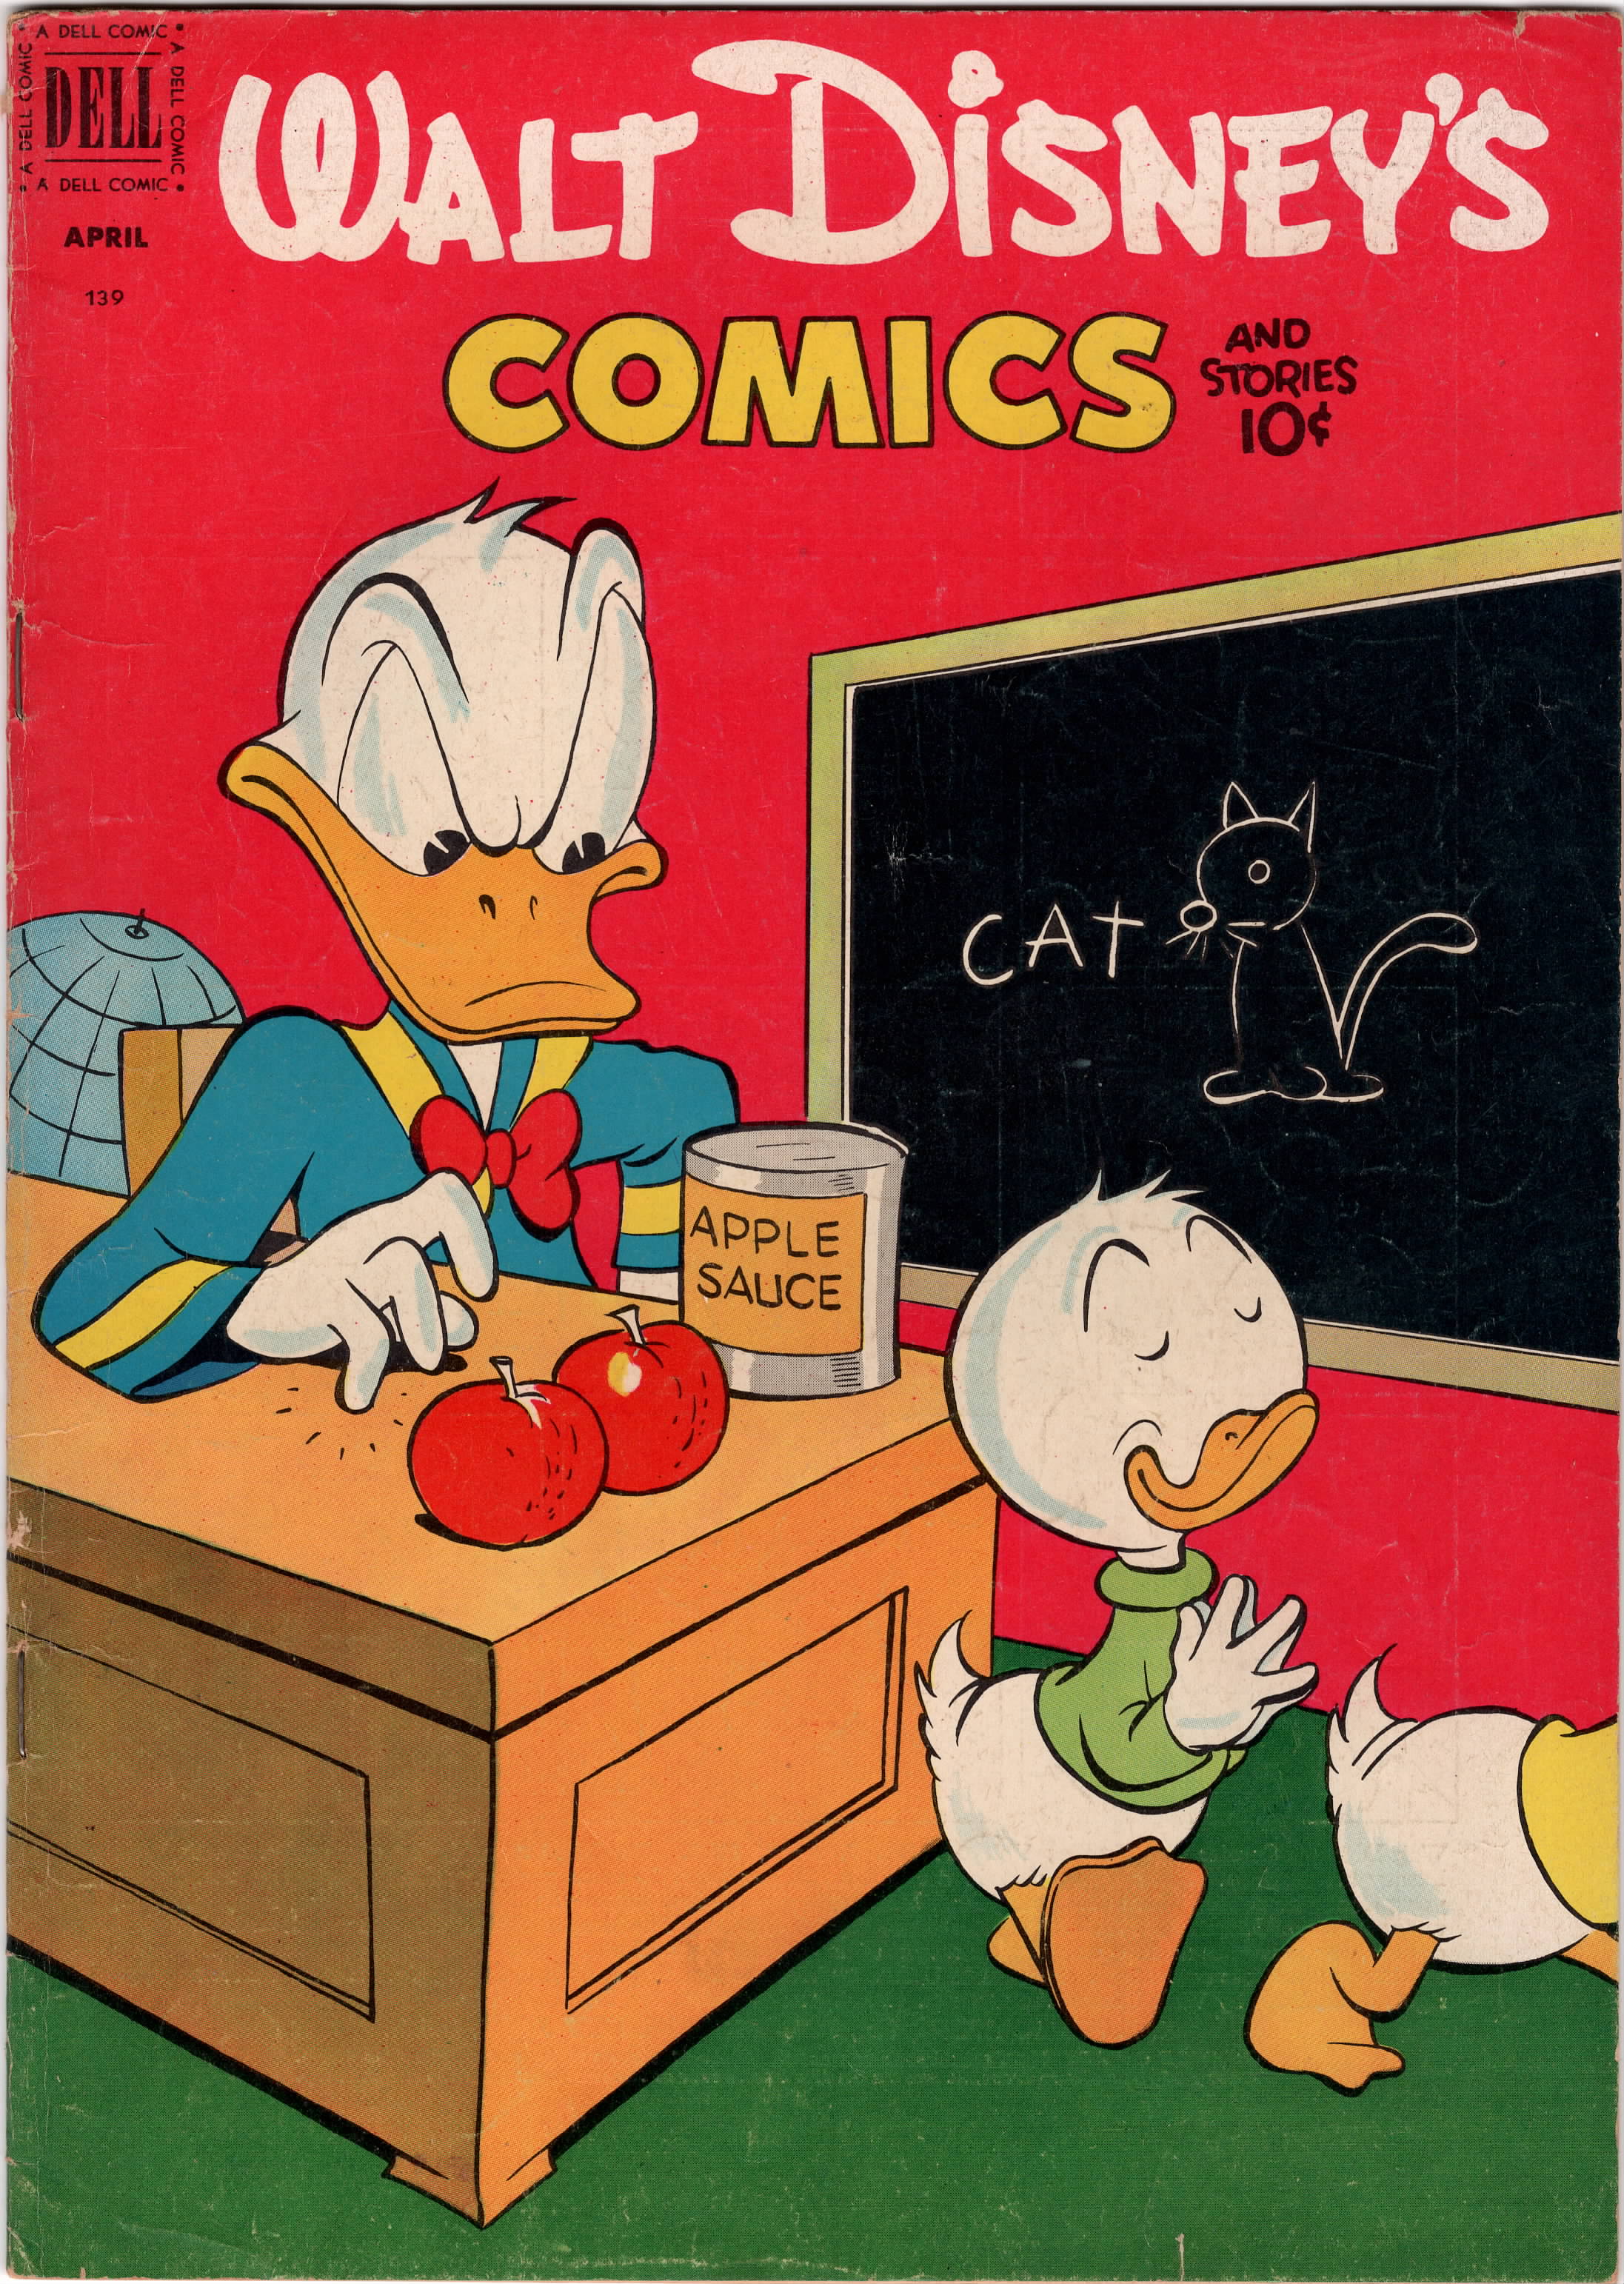 Walt Disney's Comics & Stories #139